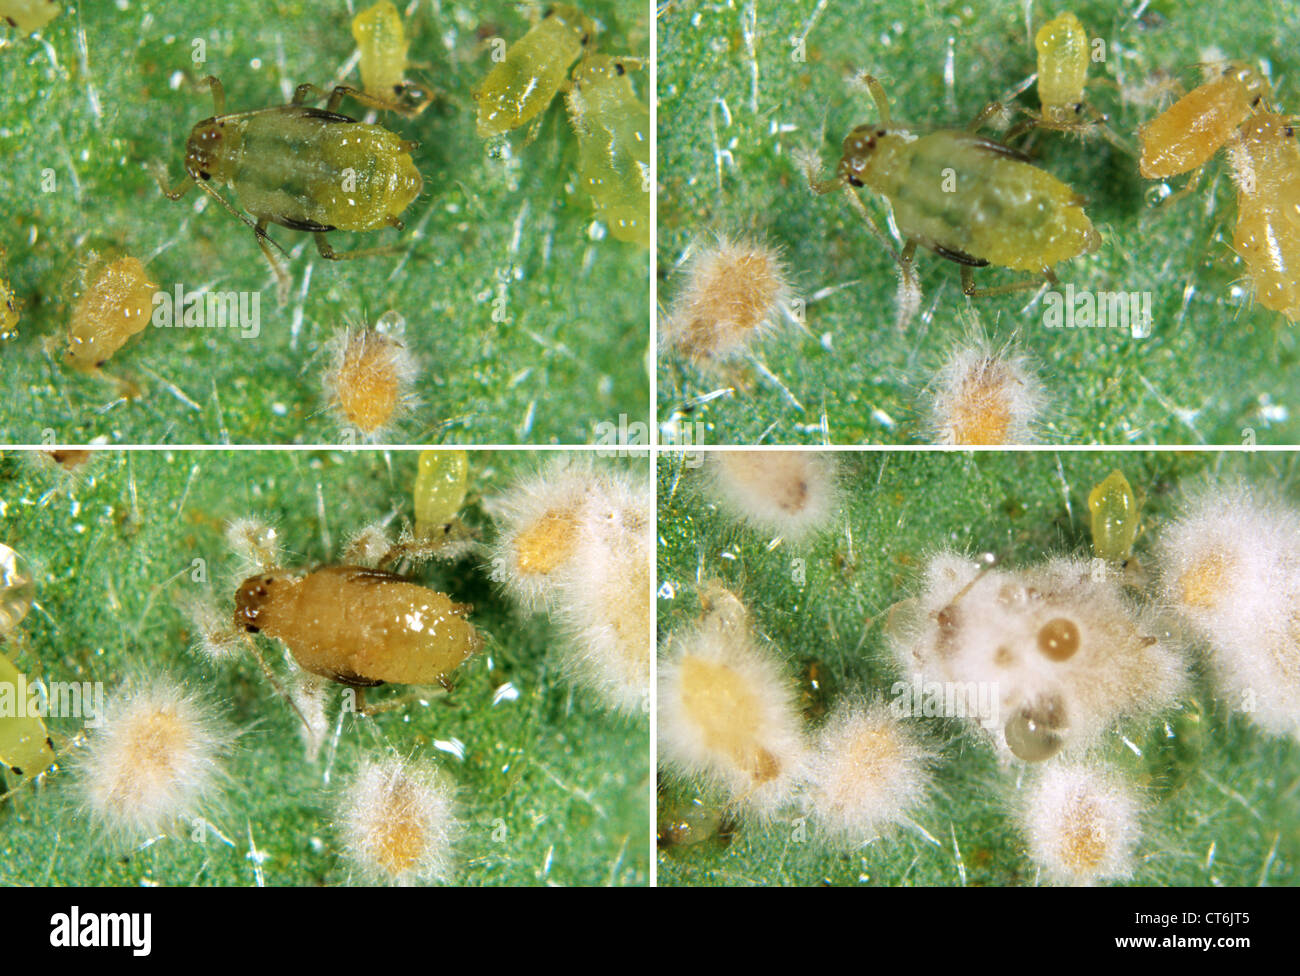 Series showing the development of entomopathogenic fungus Verticillium lecanii on aphid host pests Stock Photo